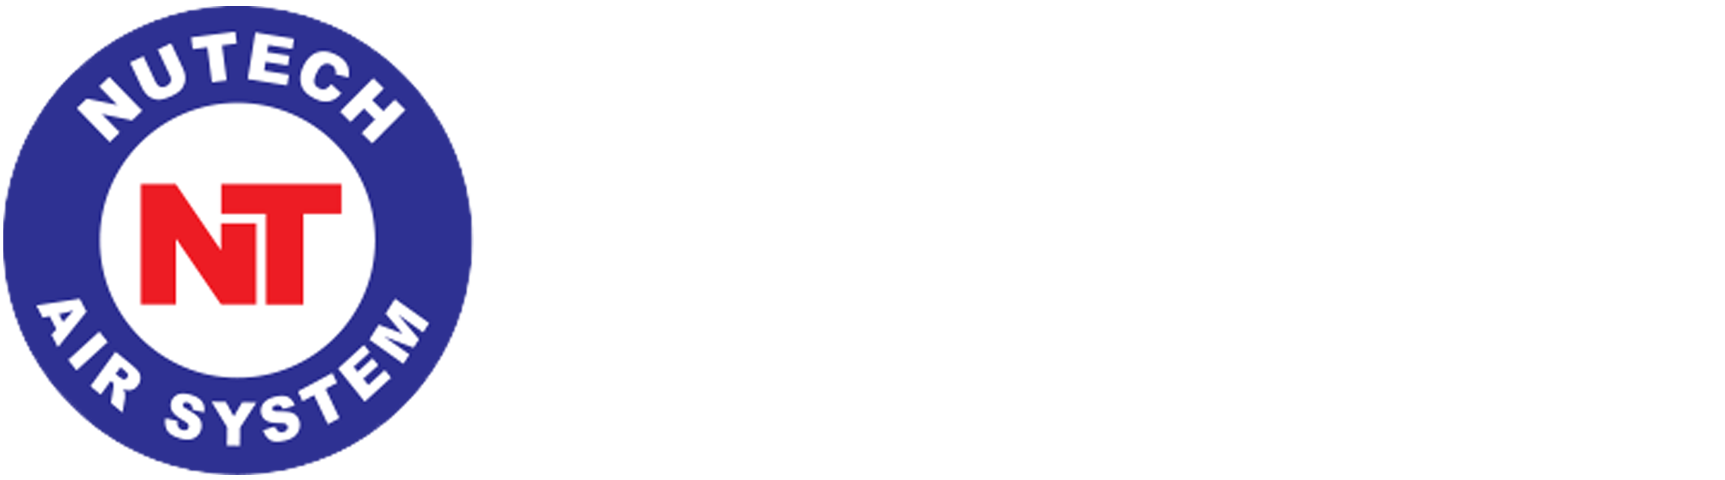 Nutech Air System - Hvac Expert in Brampton